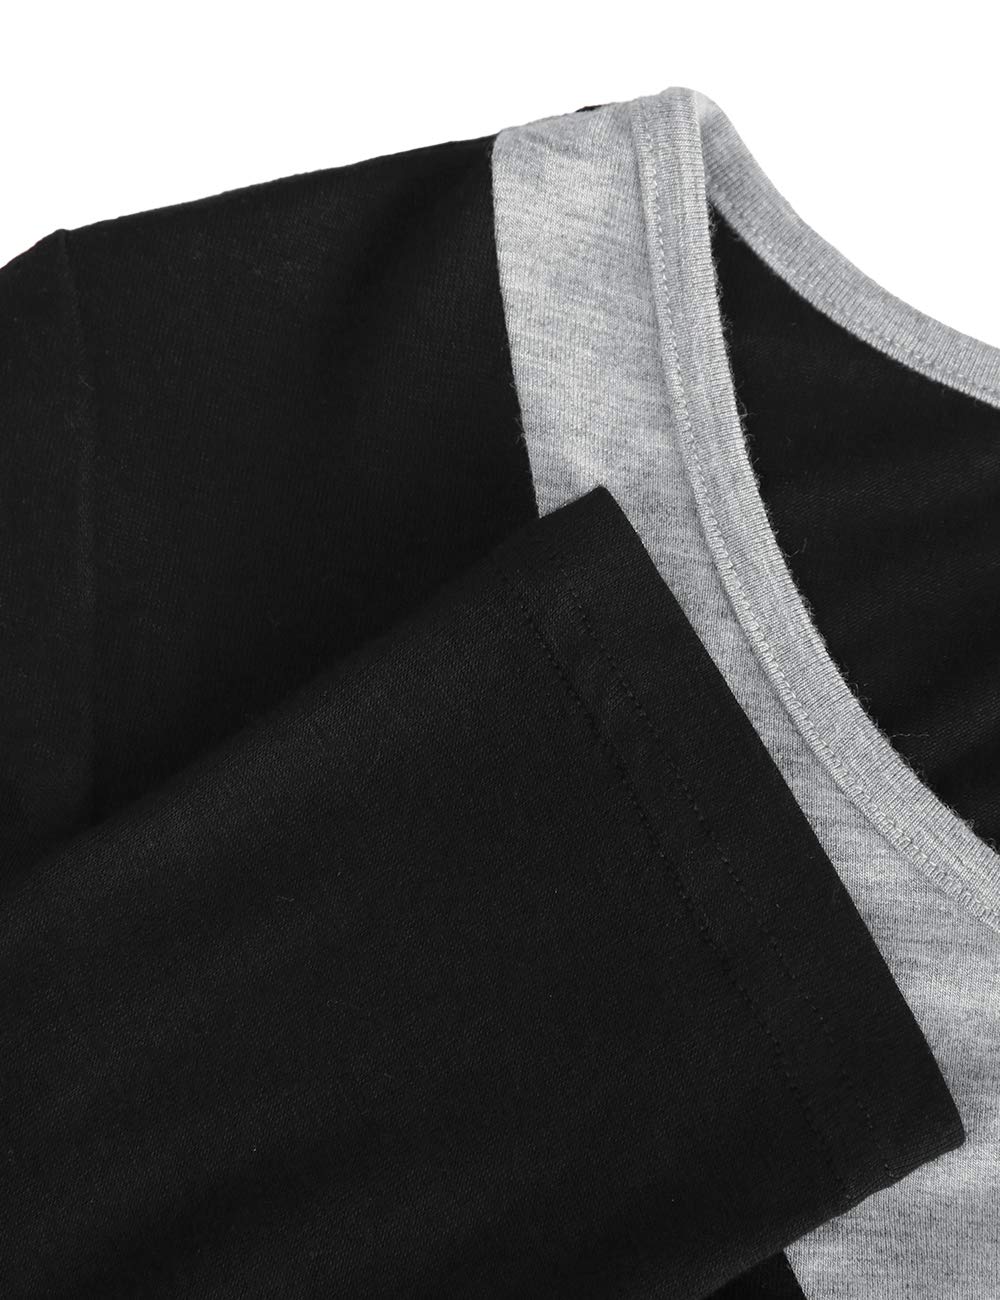 DJT Long Sleeve Black And Light Grey Women's Tunic Shirts Scoop Neck Hanky Hem Color Block Stretch Casual Fall T Shirt Tops